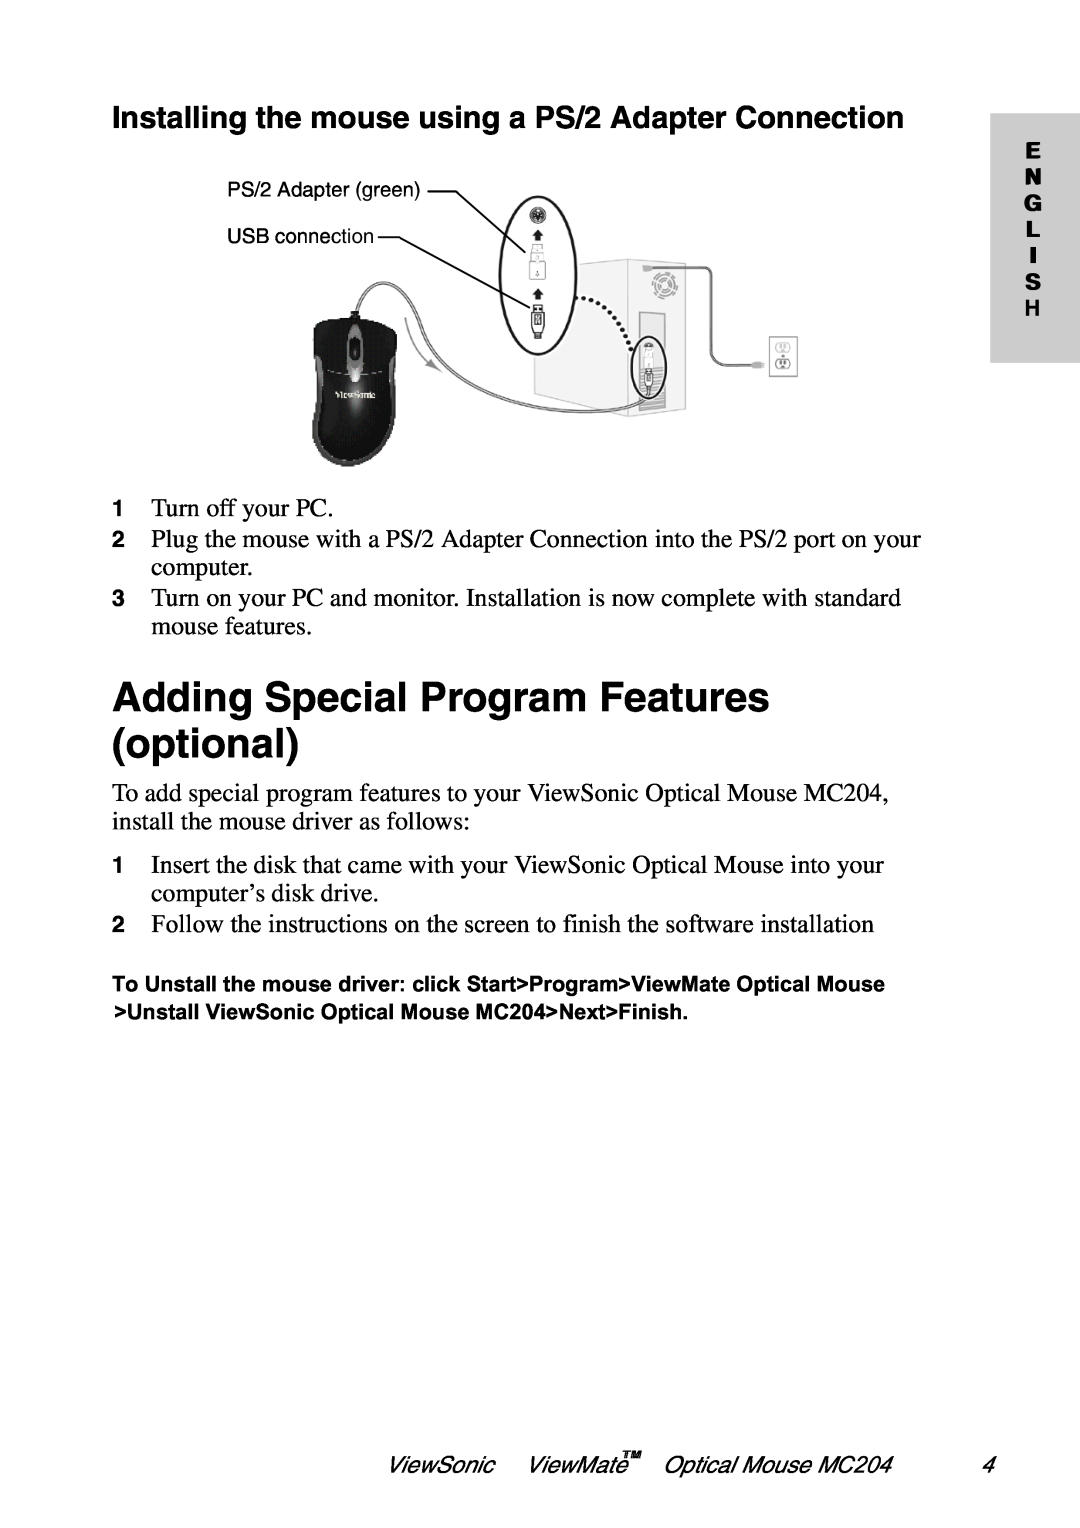 ViewSonic MC204 manual Adding Special Program Features optional 